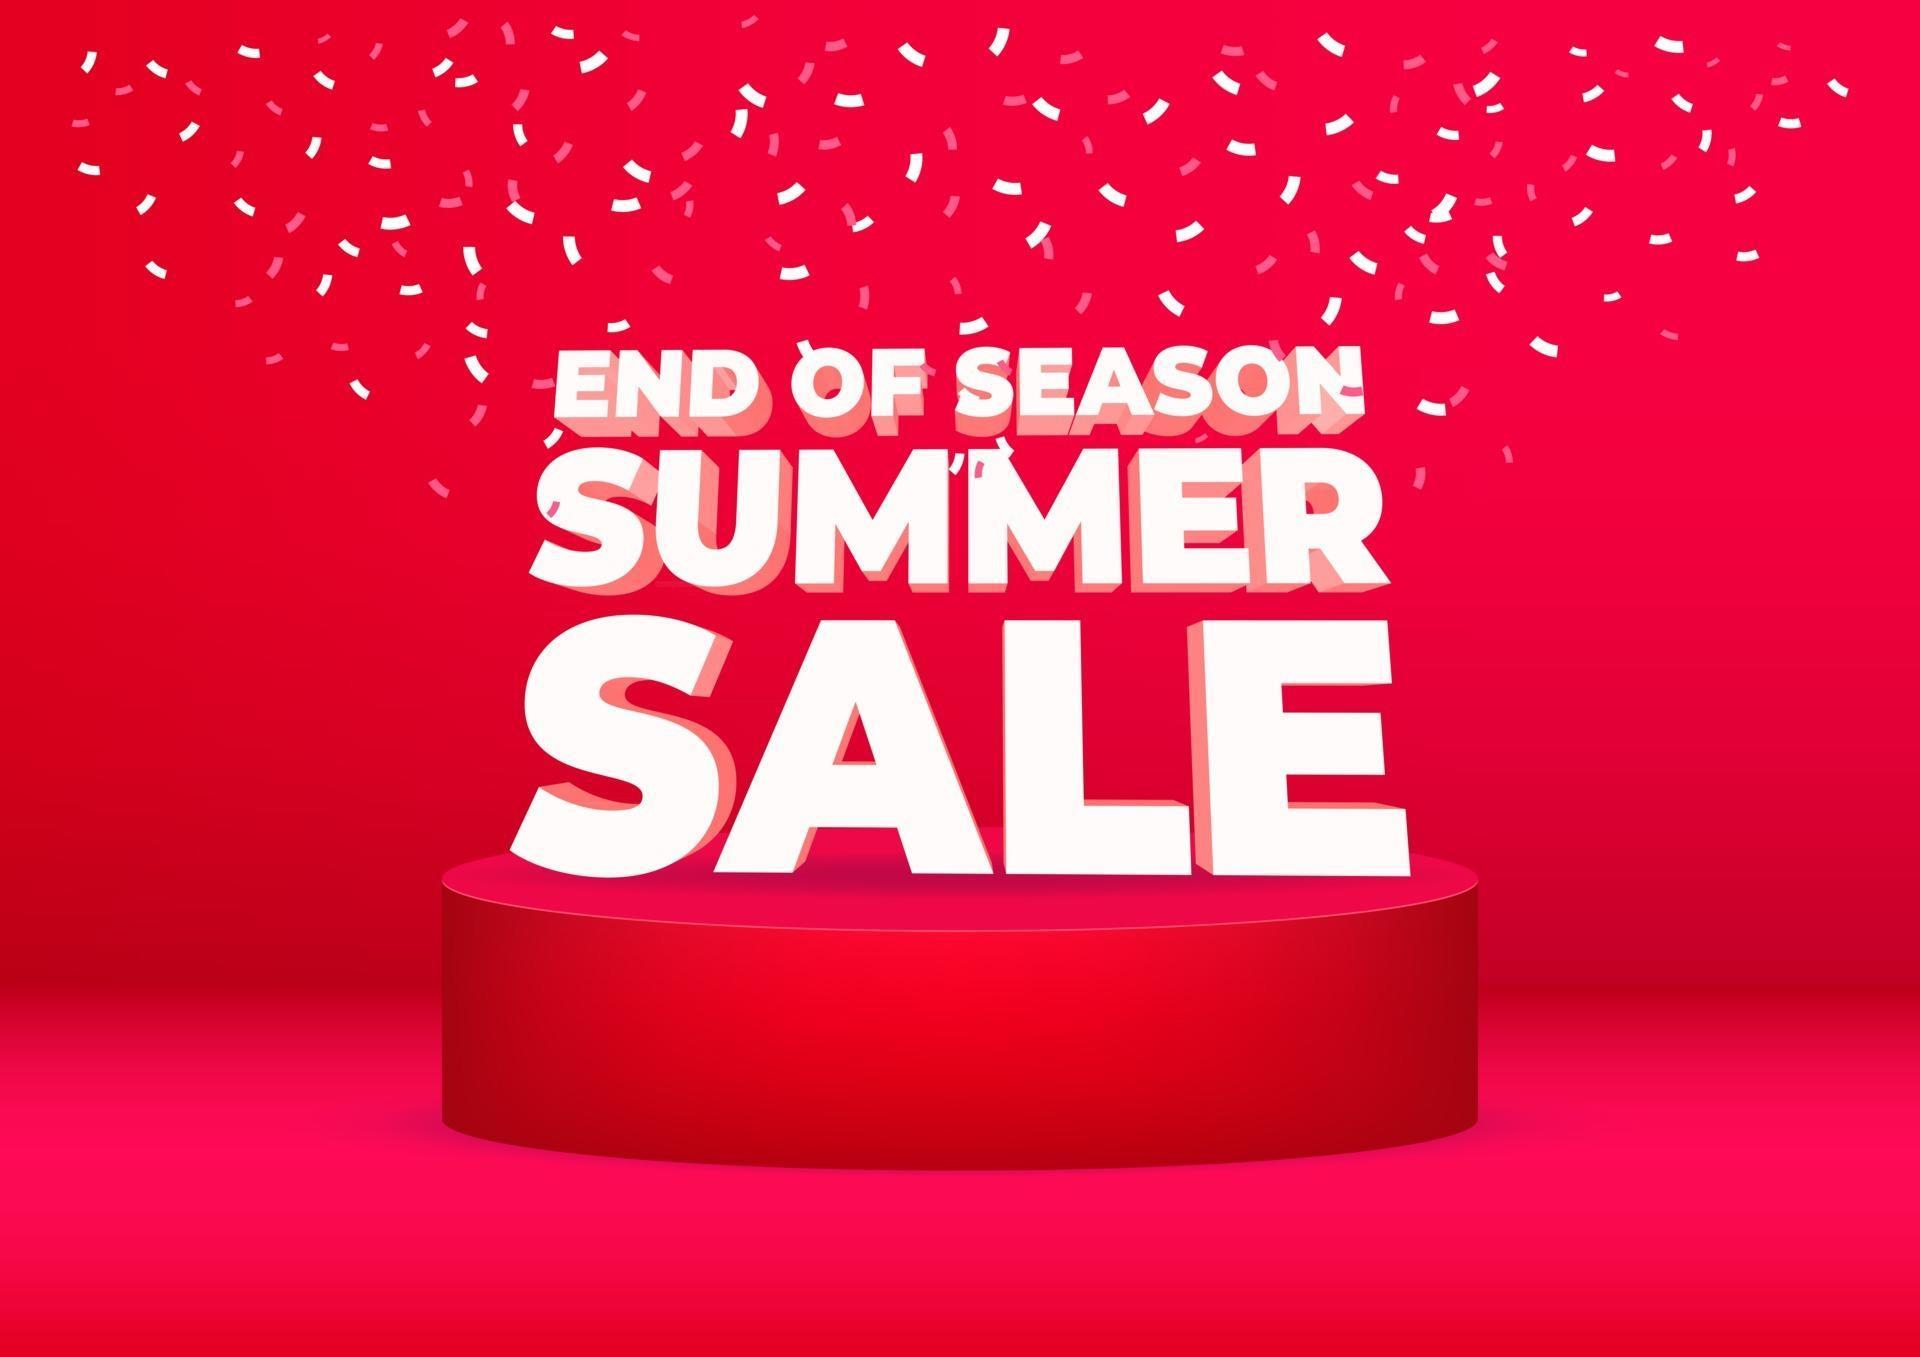 End of Summer Sale